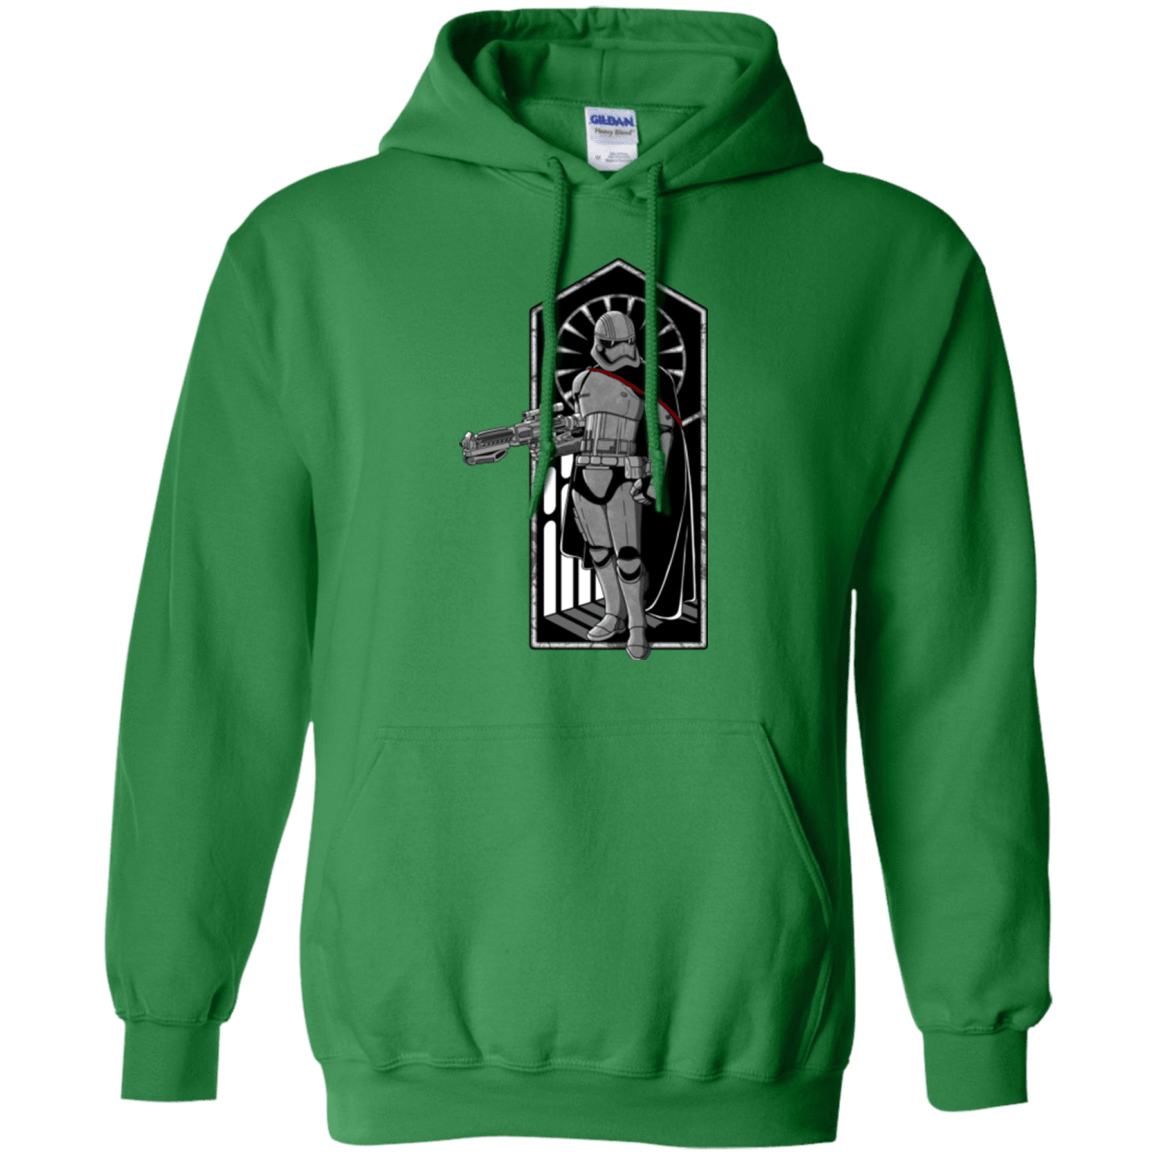 Sweatshirts Irish Green / S Captain Pullover Hoodie